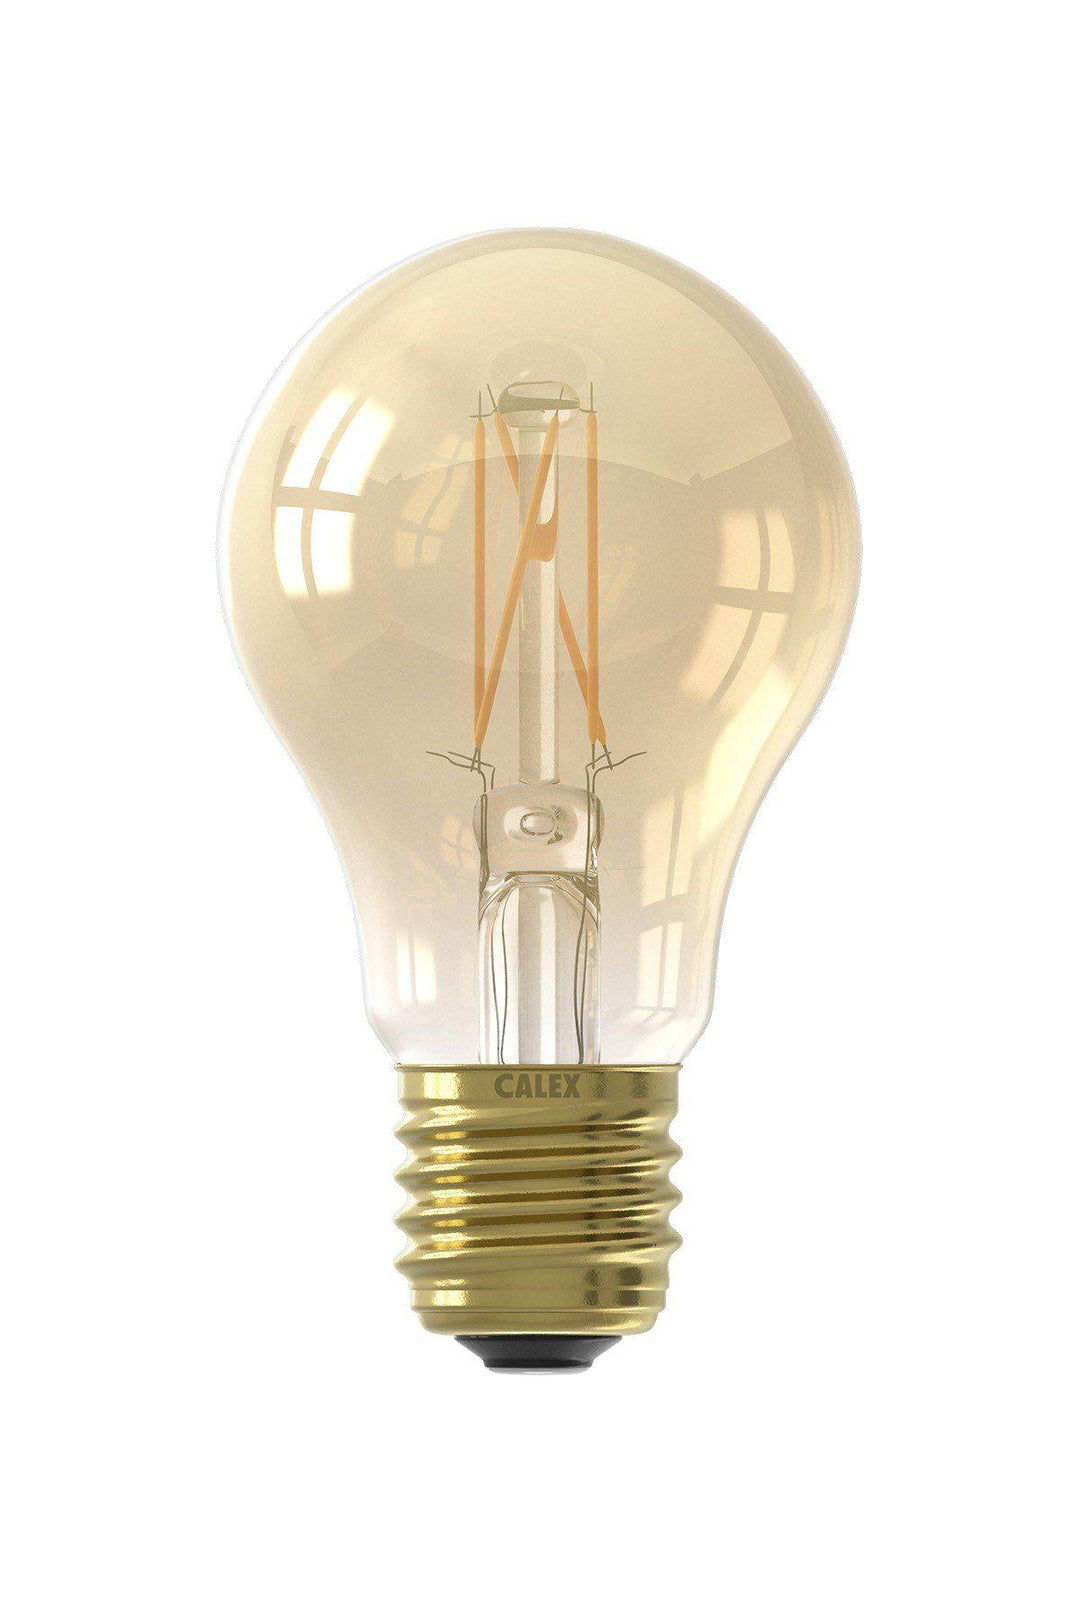 Calex 474504 | LED GLS Gold Filament Bulb | E27 | A60 |4W